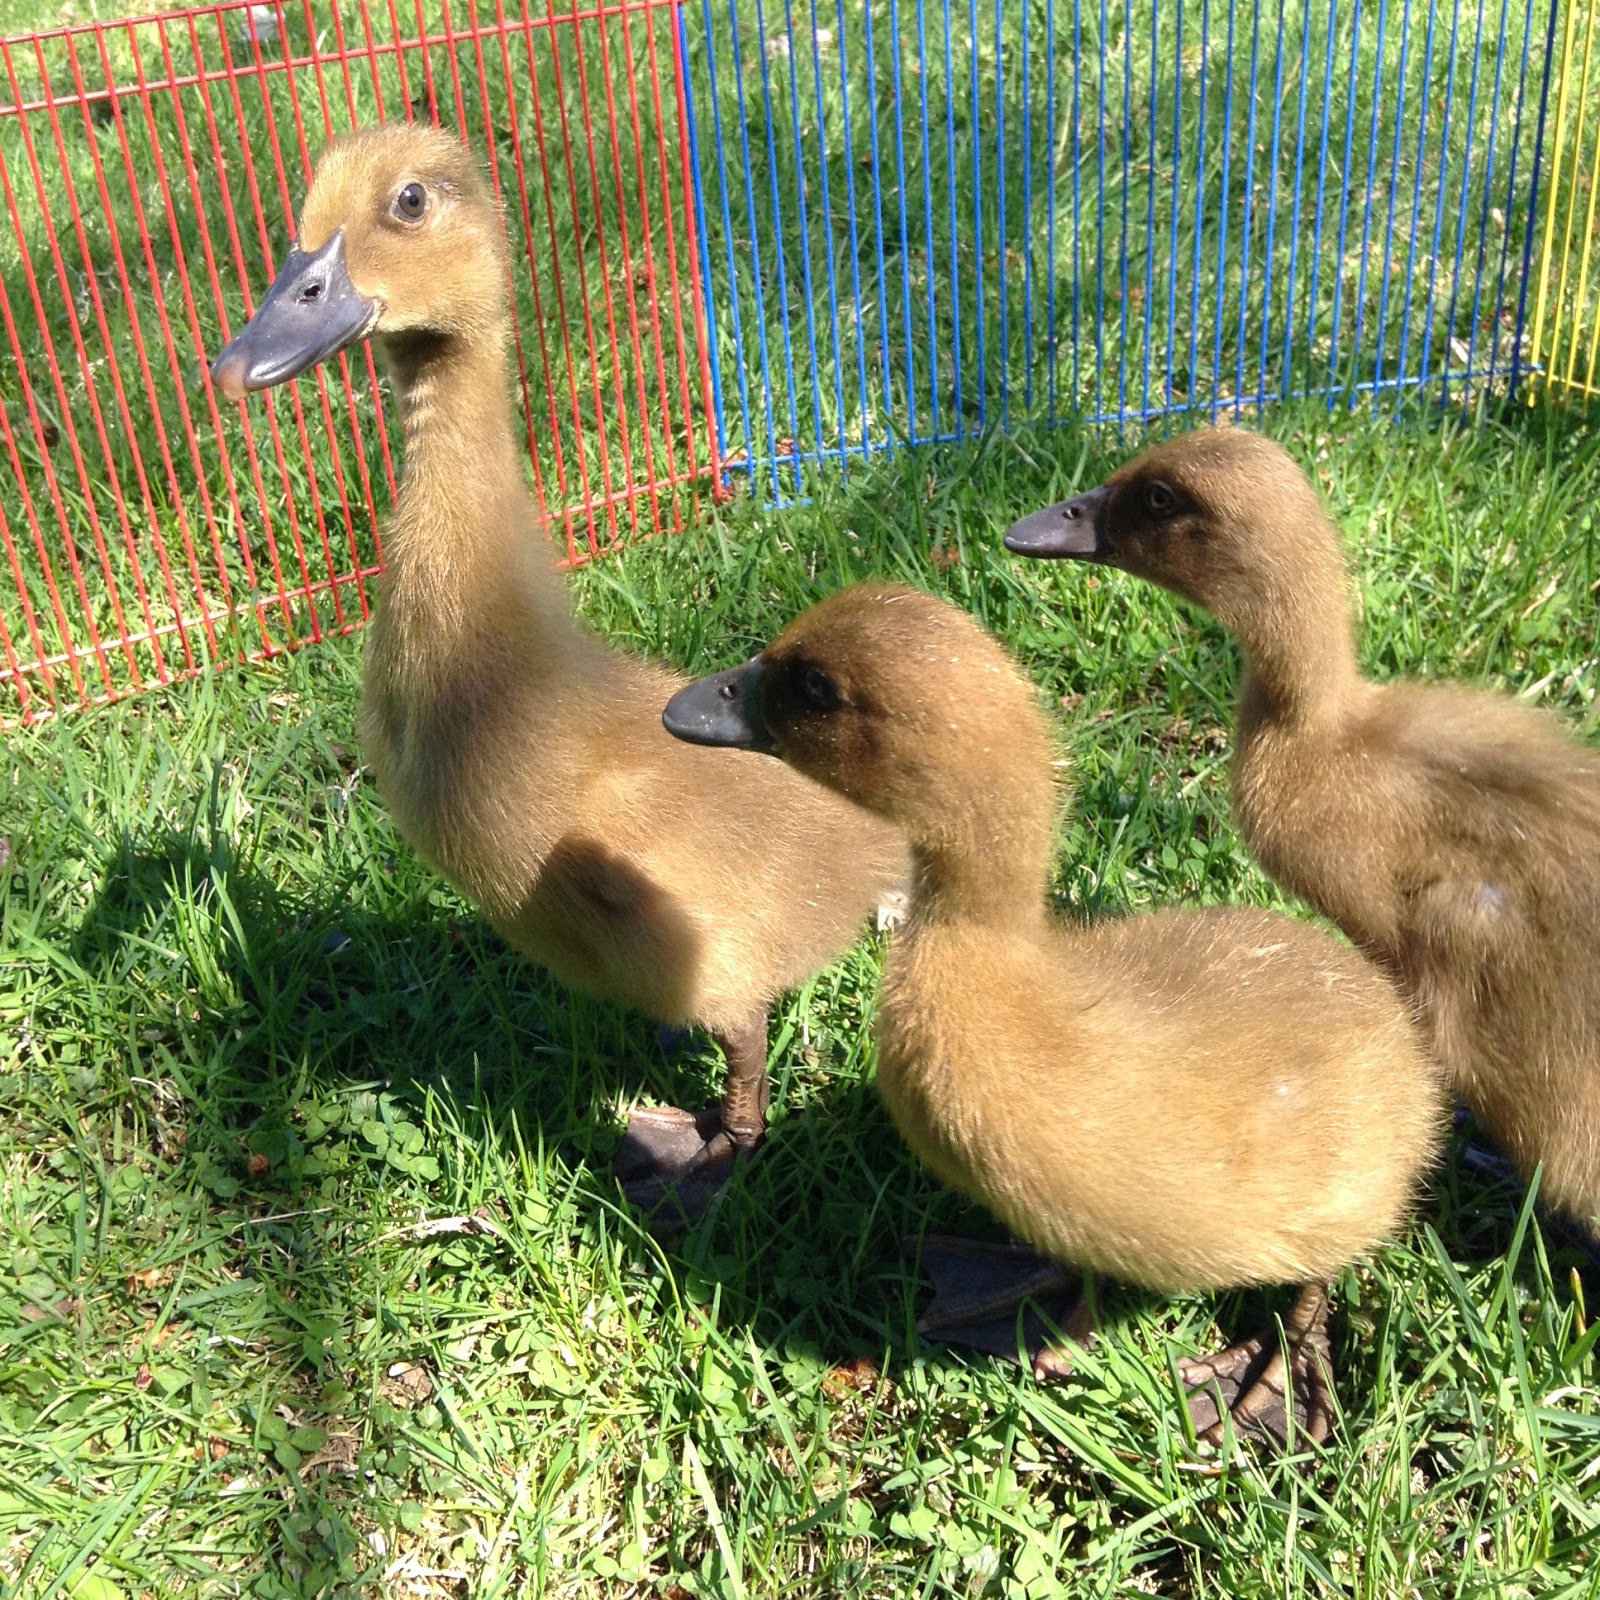 Raising Ducklings To Ducks | BackYard Chickens - Learn How ...